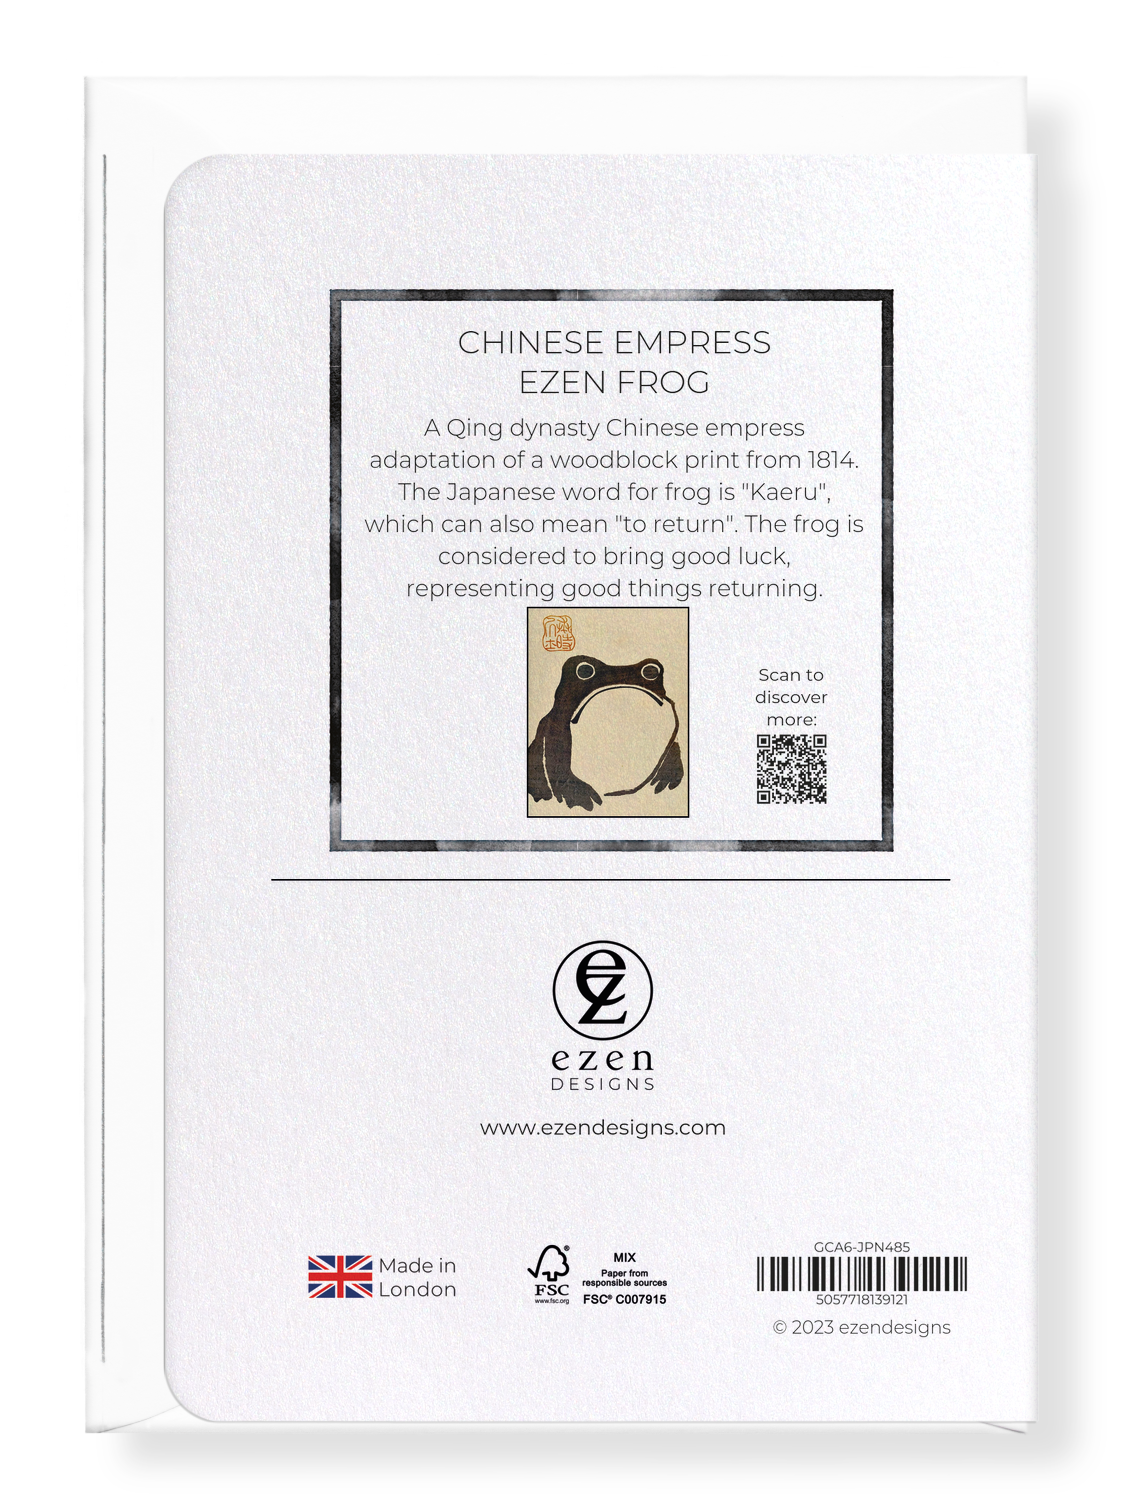 Ezen Designs - CHINESE EMPRESS EZEN FROG - Greeting Card - Back